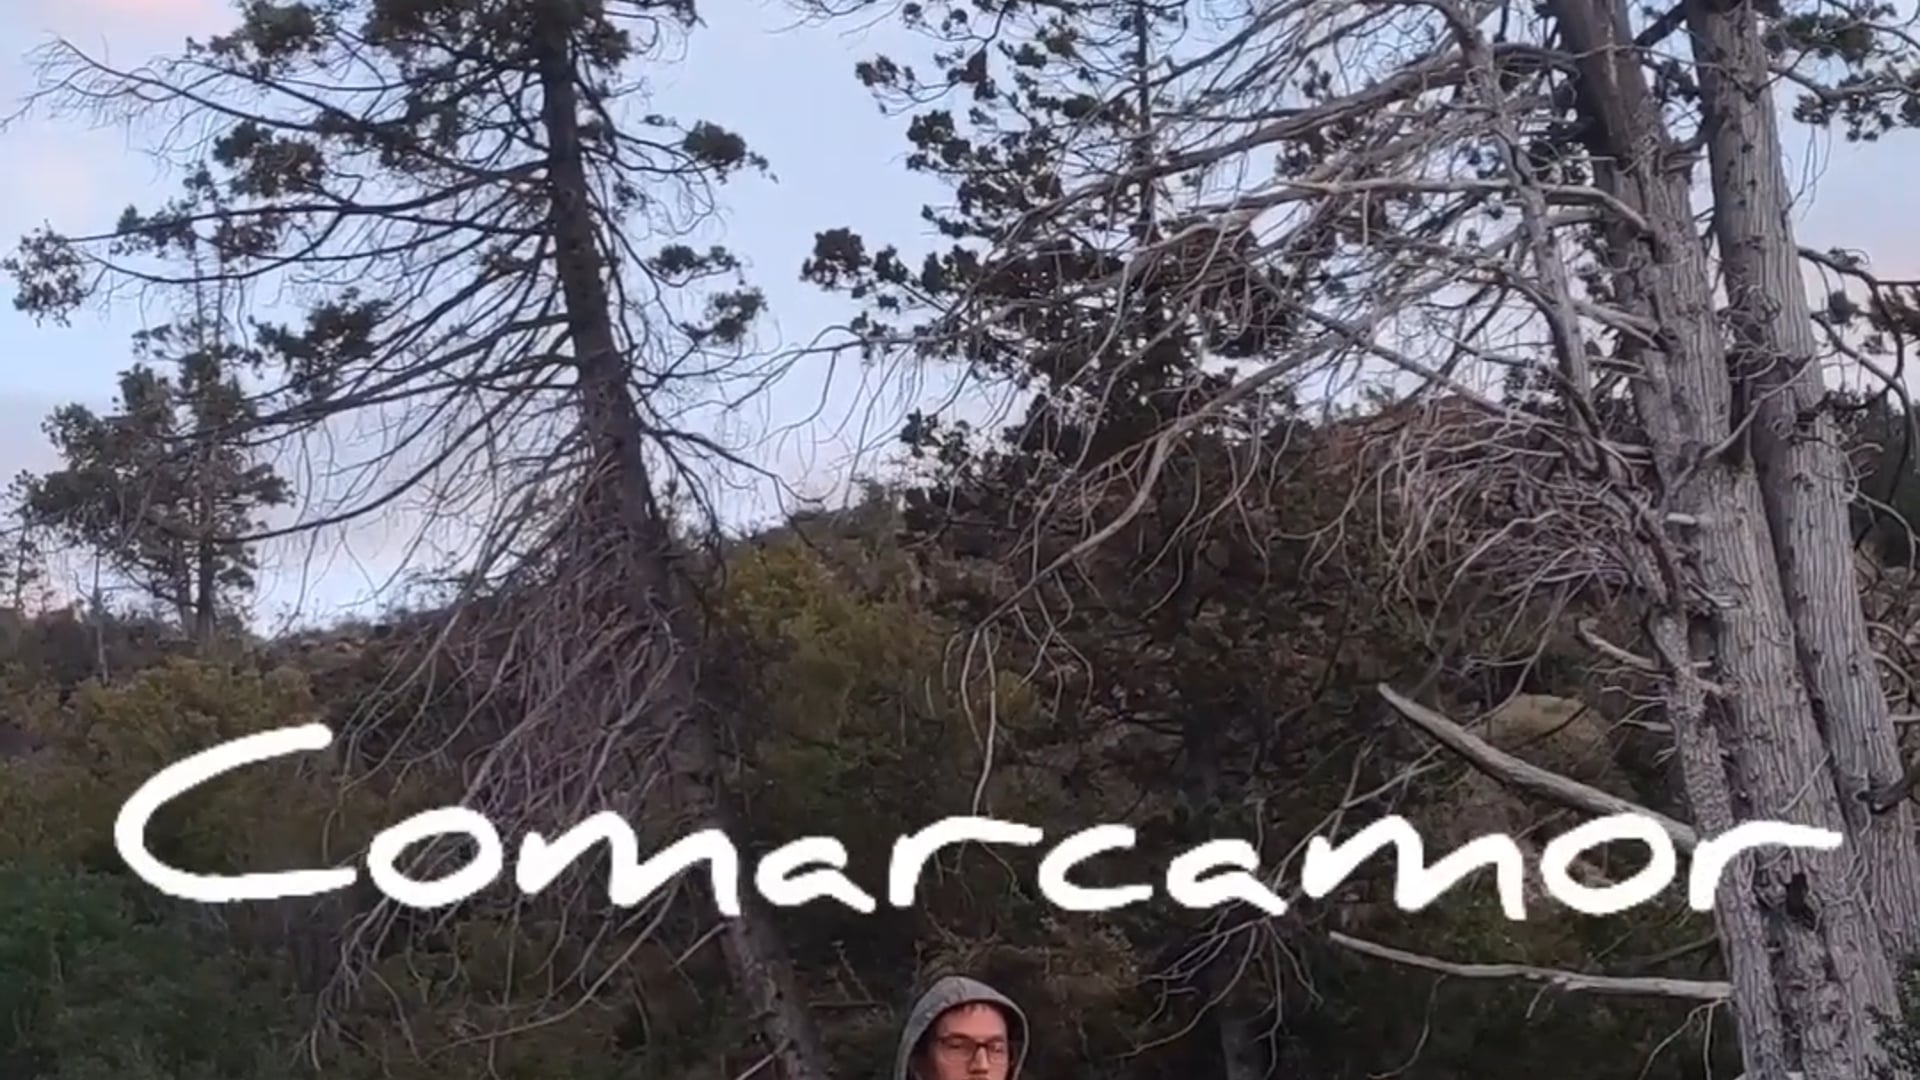 Comarcamor (Trailer)